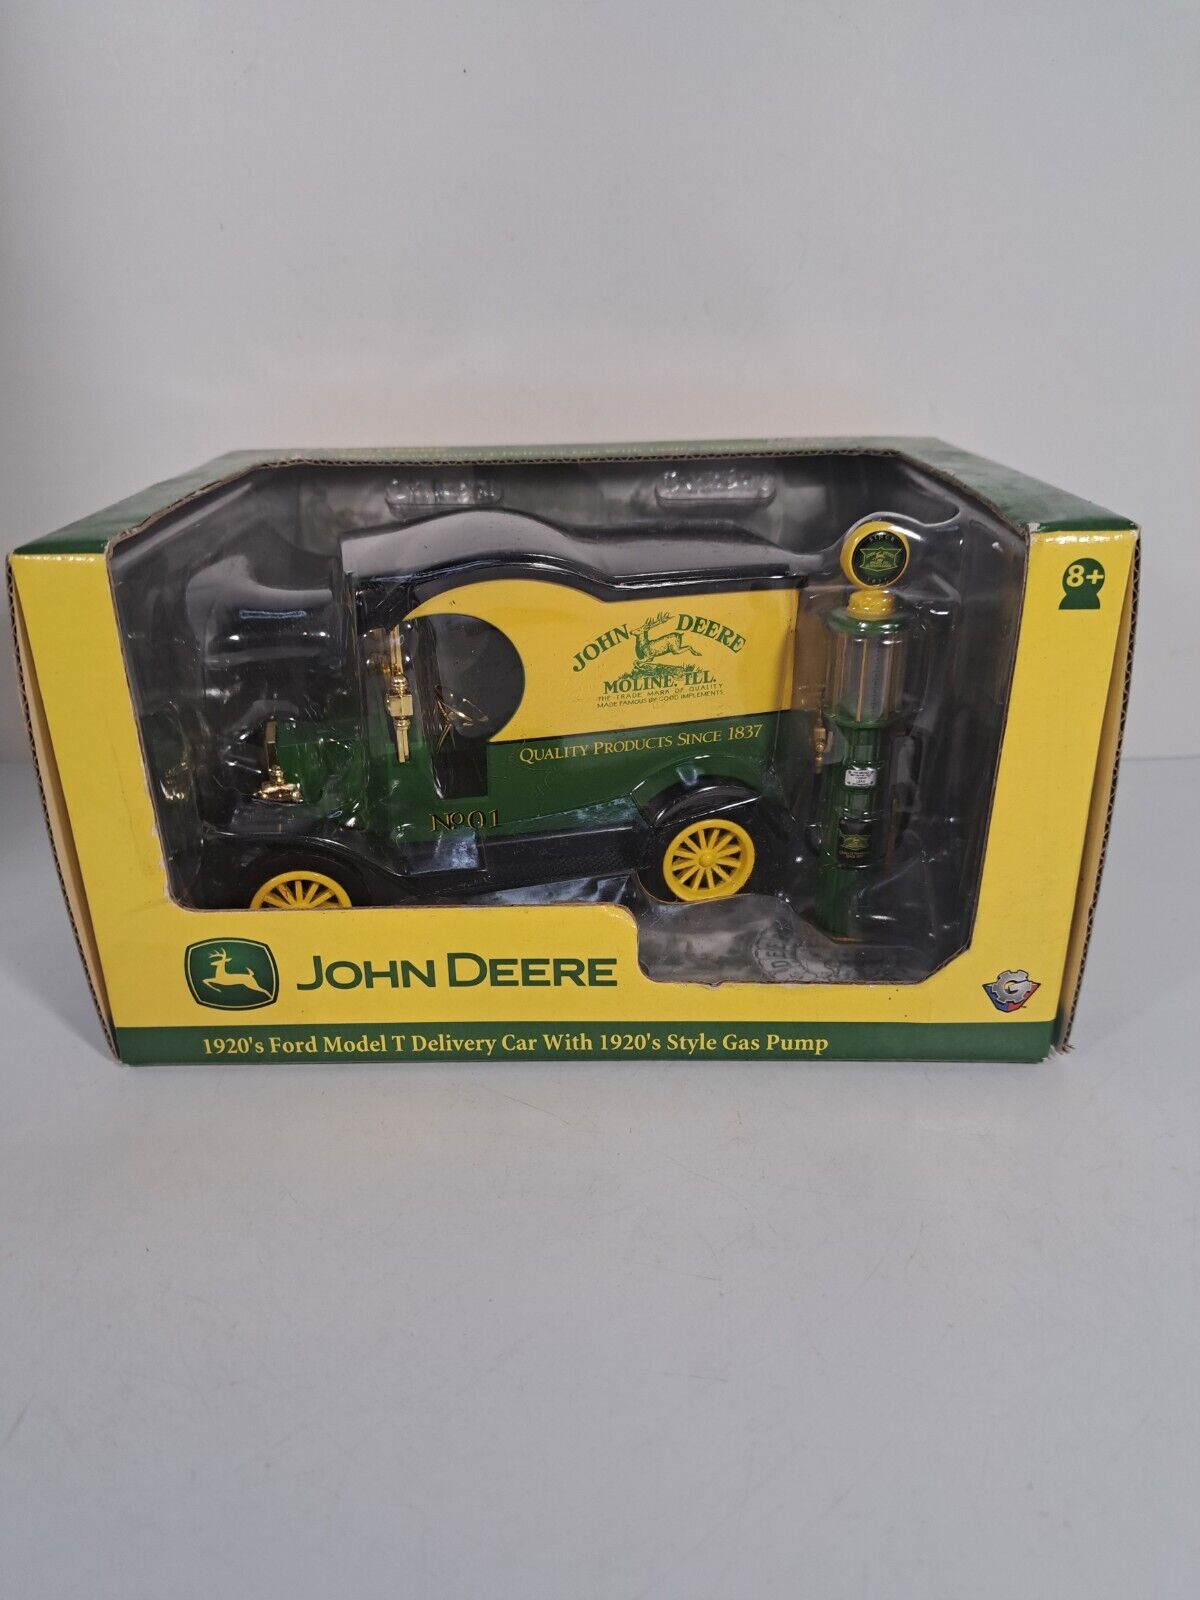 2005 Gearbox Toys John Deere 1920's Model T Delivery Car W/ Gas Pump NIB